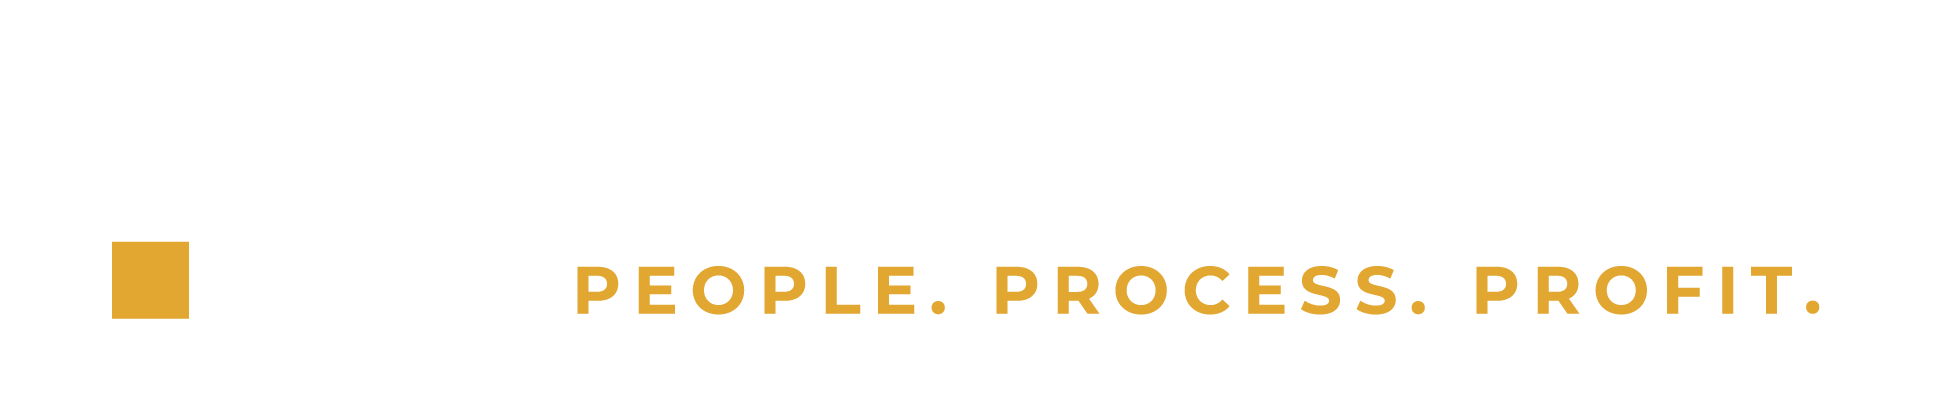 Building Excellence logo